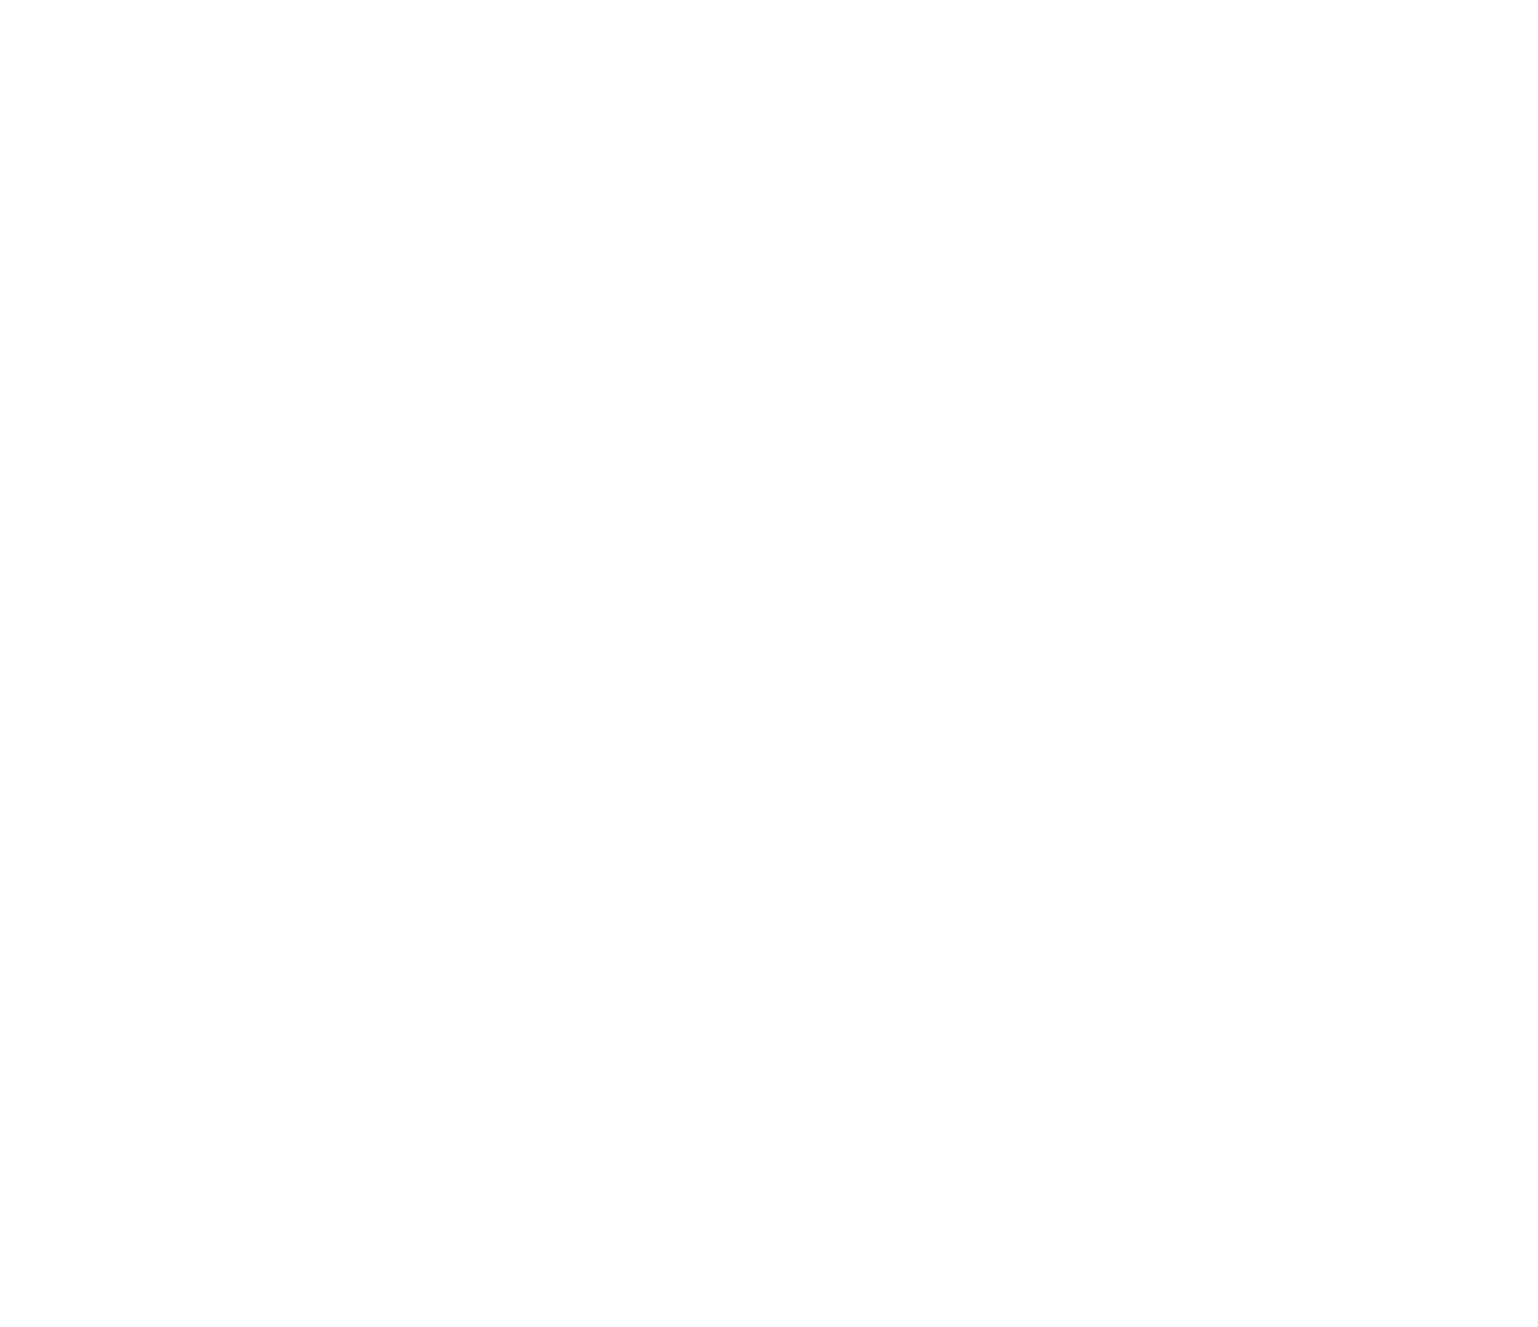 Ramsay Health Care logo large for dark backgrounds (transparent PNG)